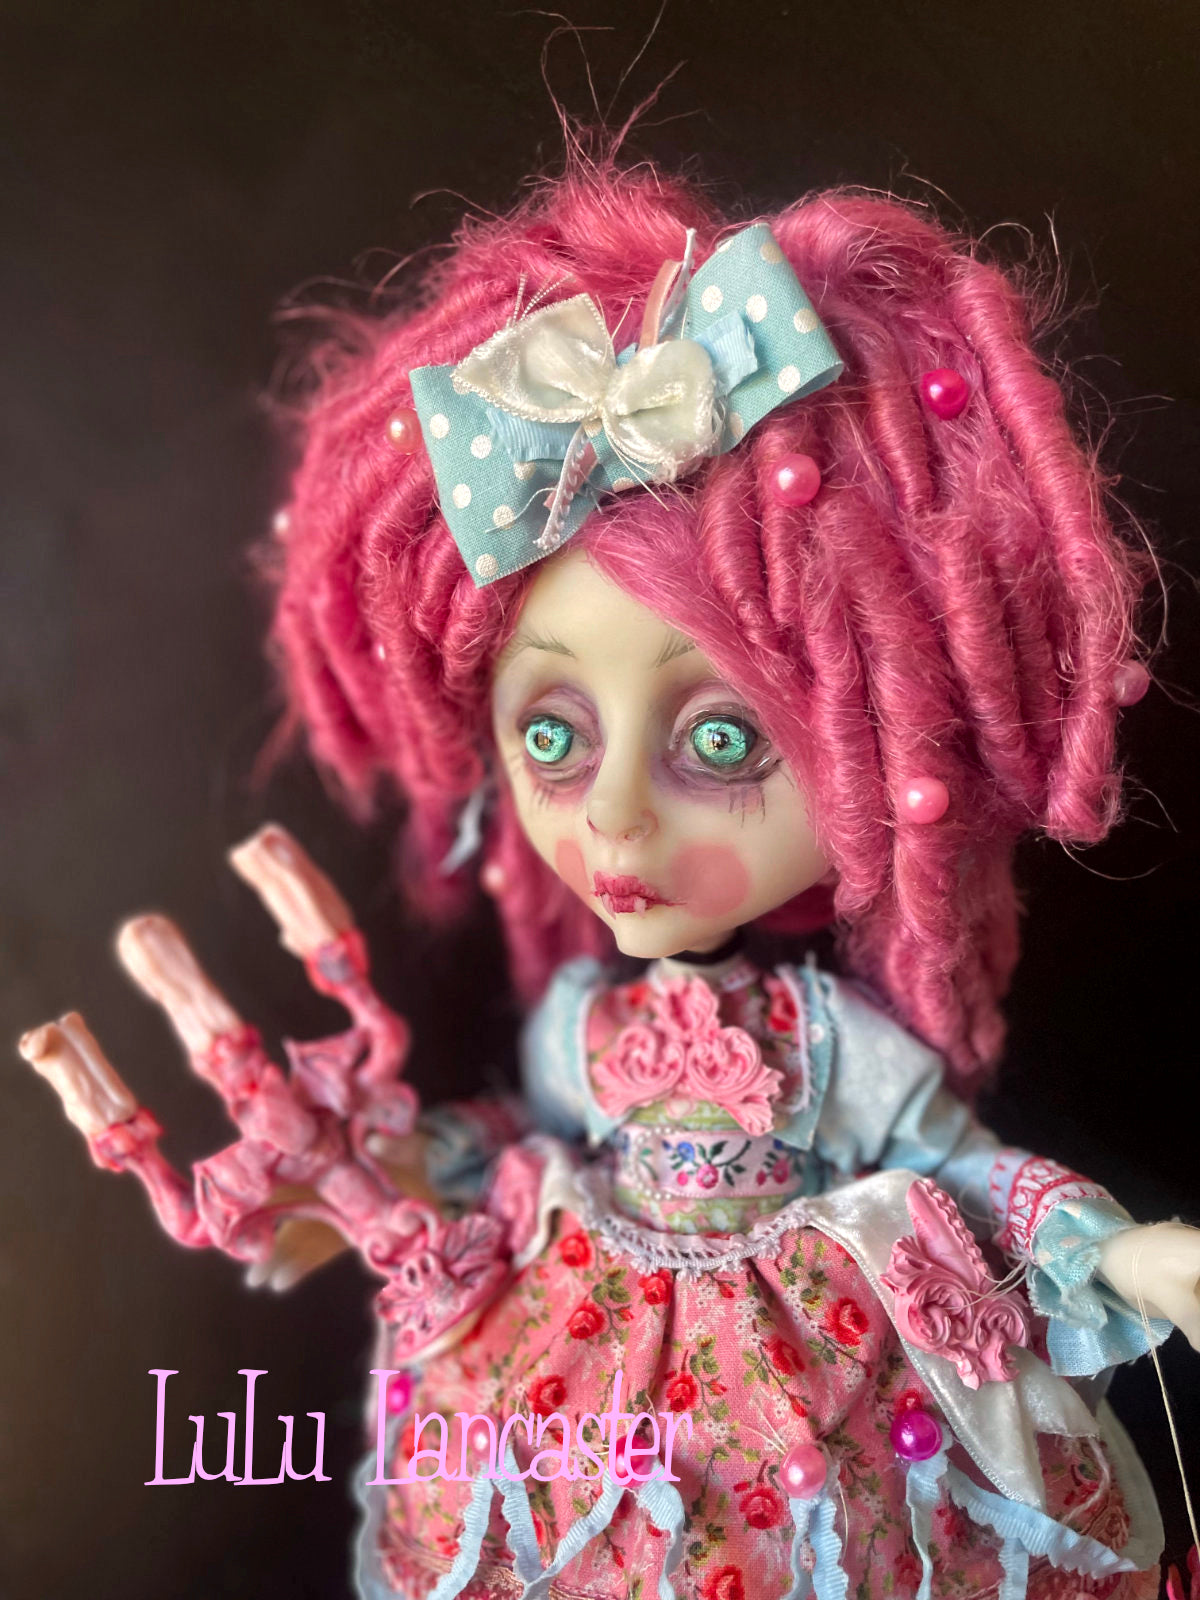 Sweetie VonPink the Rococo Vampire Original LuLu Lancaster Art Doll